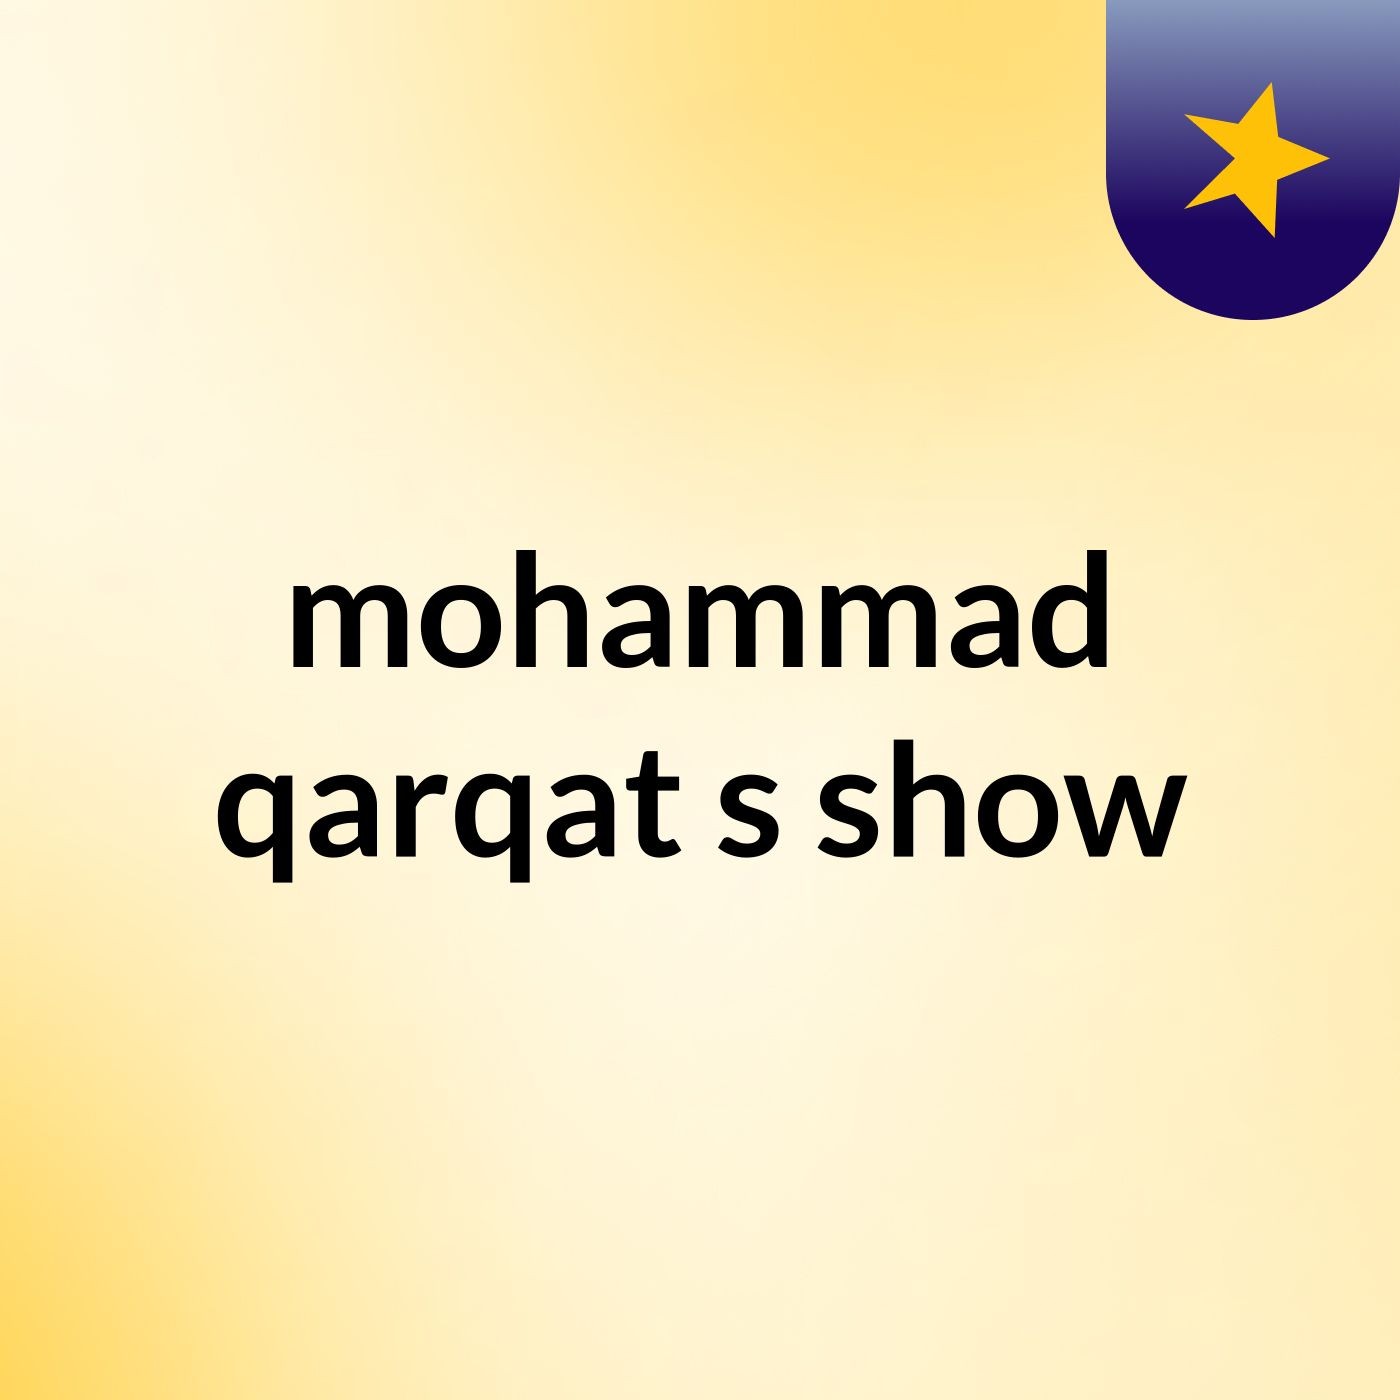 mohammad qarqat's show